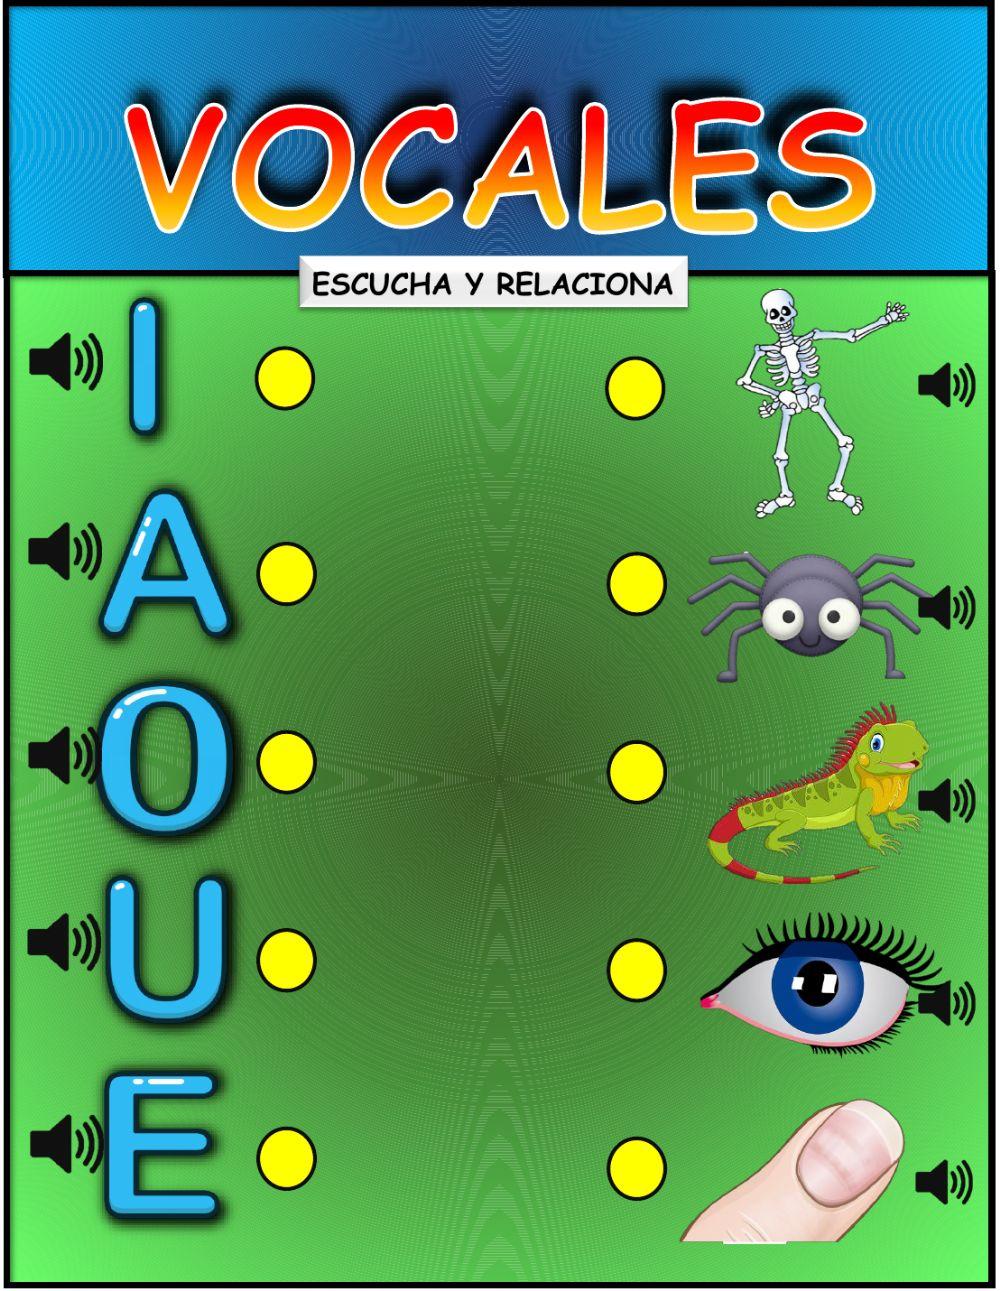 Vocales